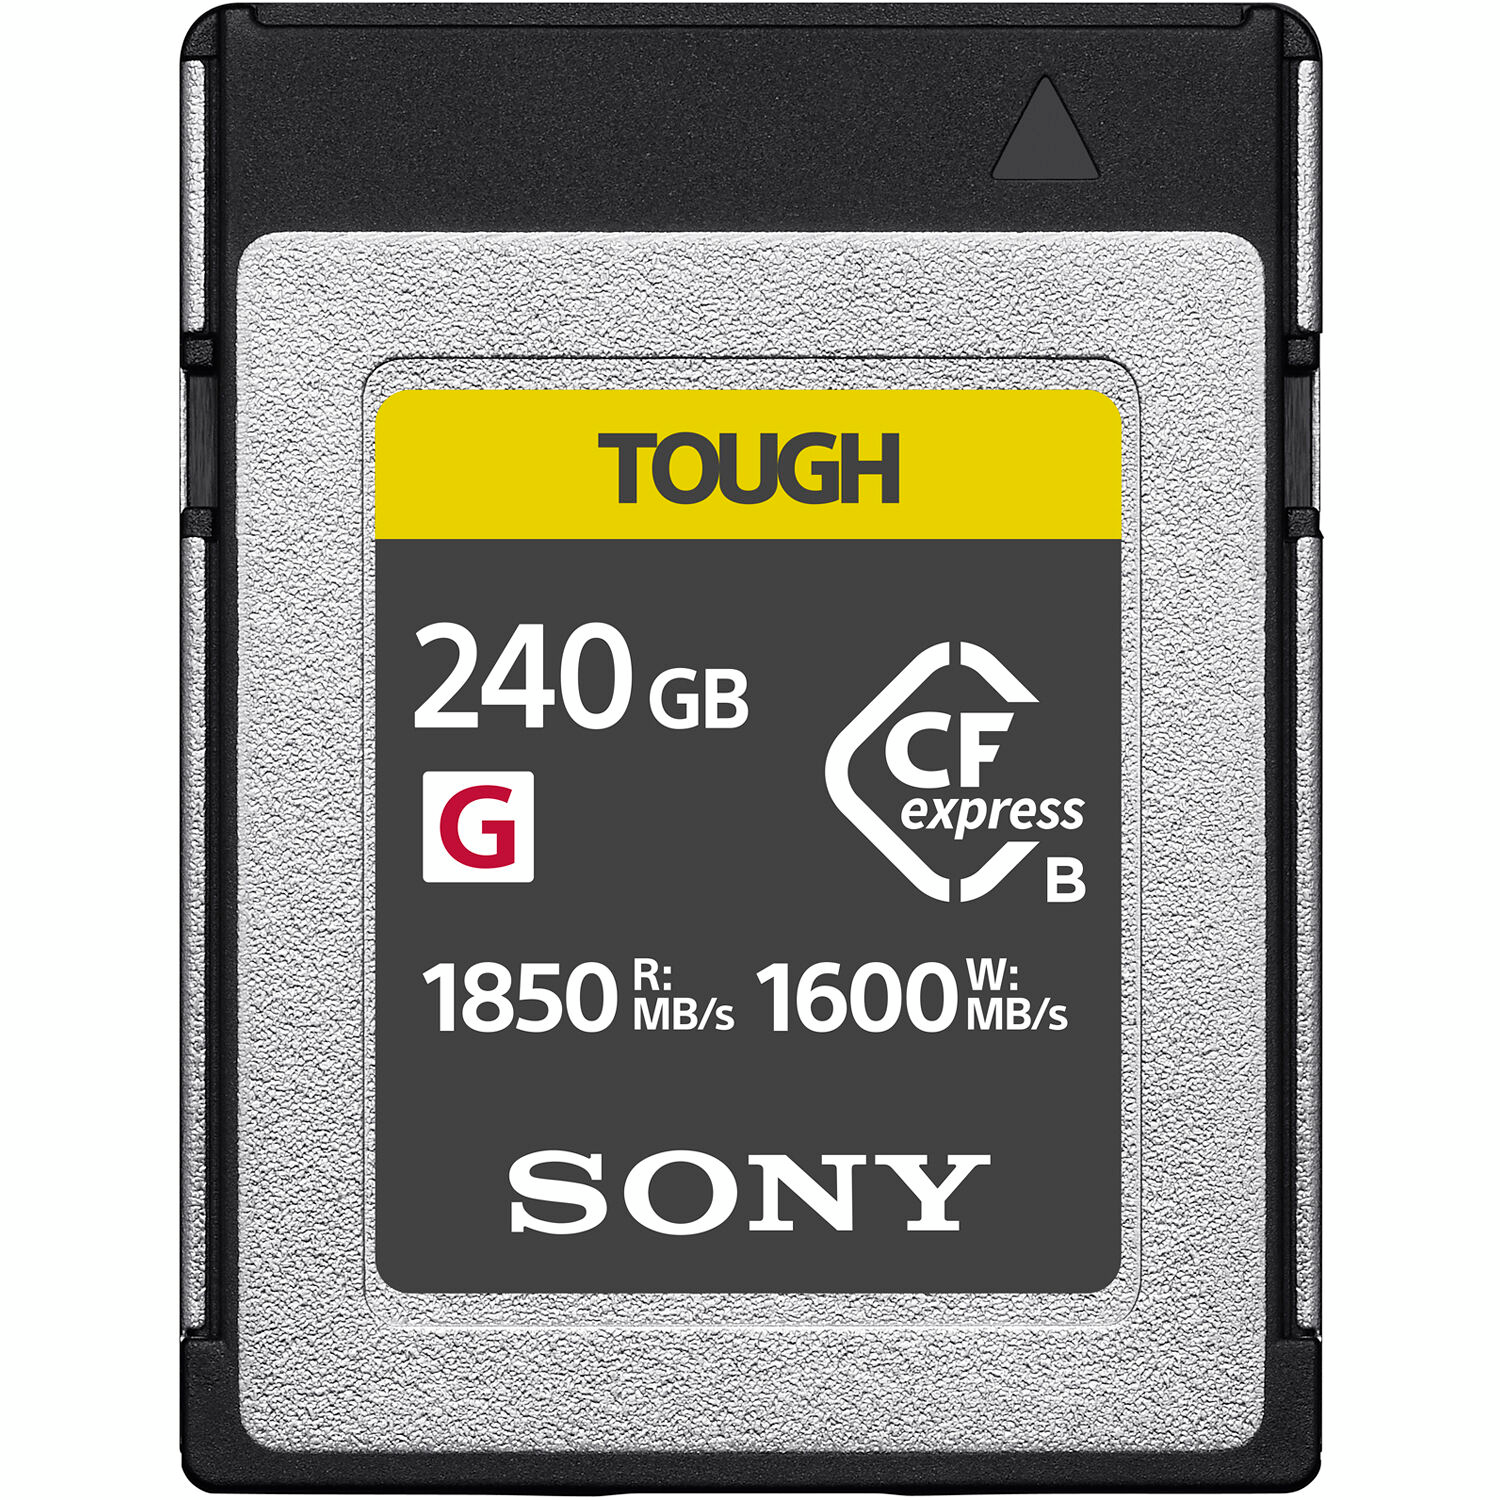 Карта памяти Sony CFexpress Type B 240GB R1850/W1600MB/s Tough (CEBG240T.CE7) фото 